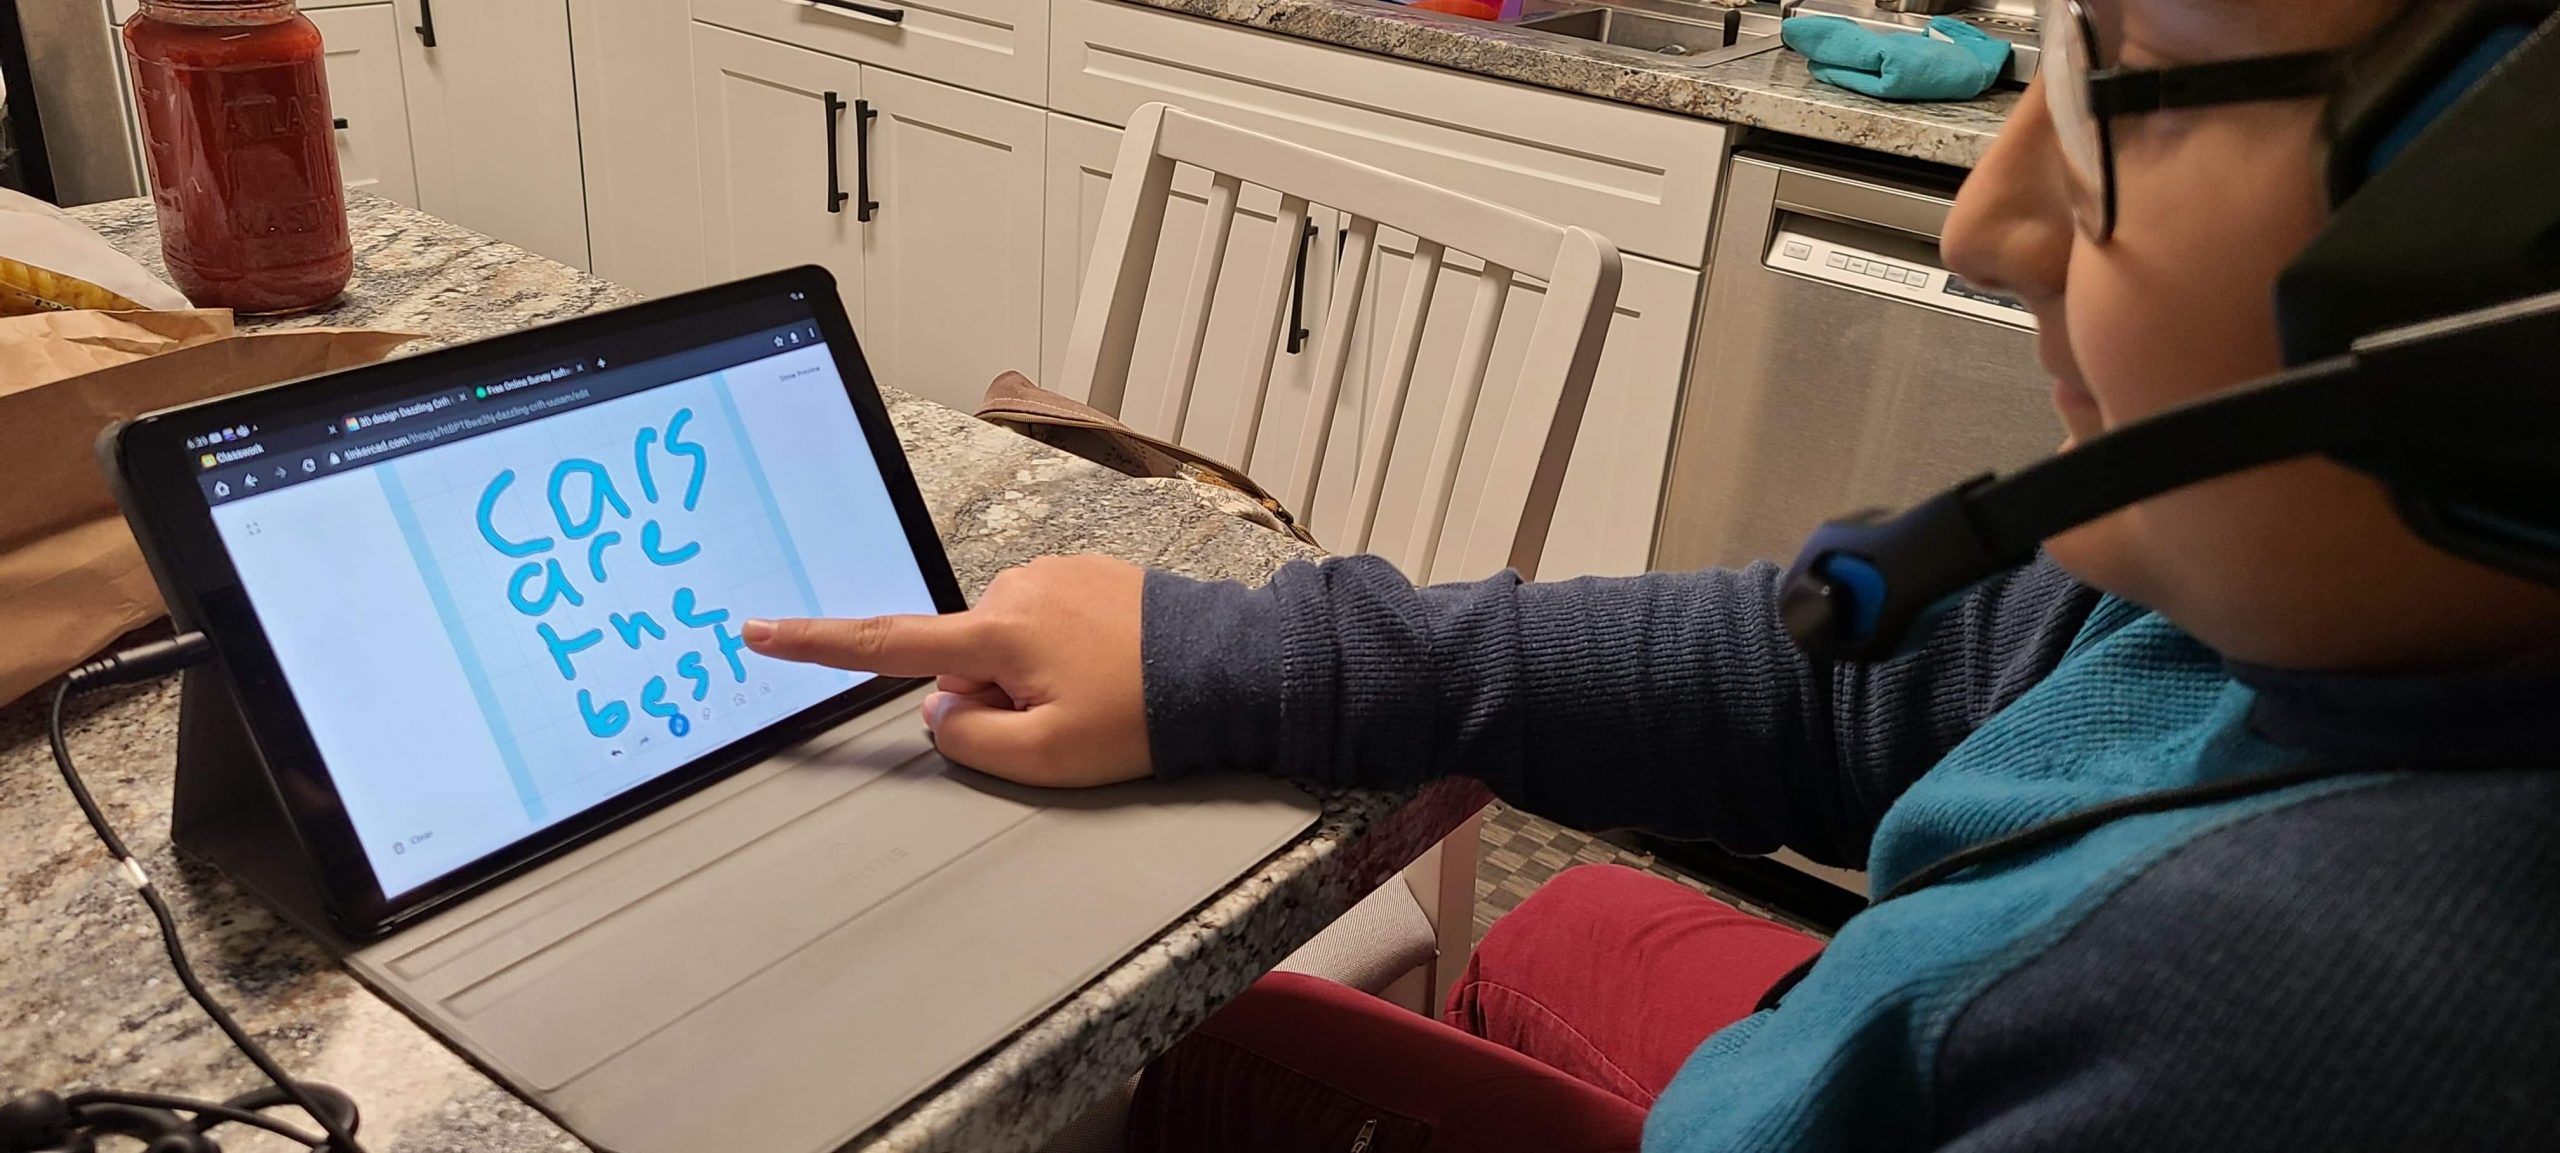 A boy works on his iPad